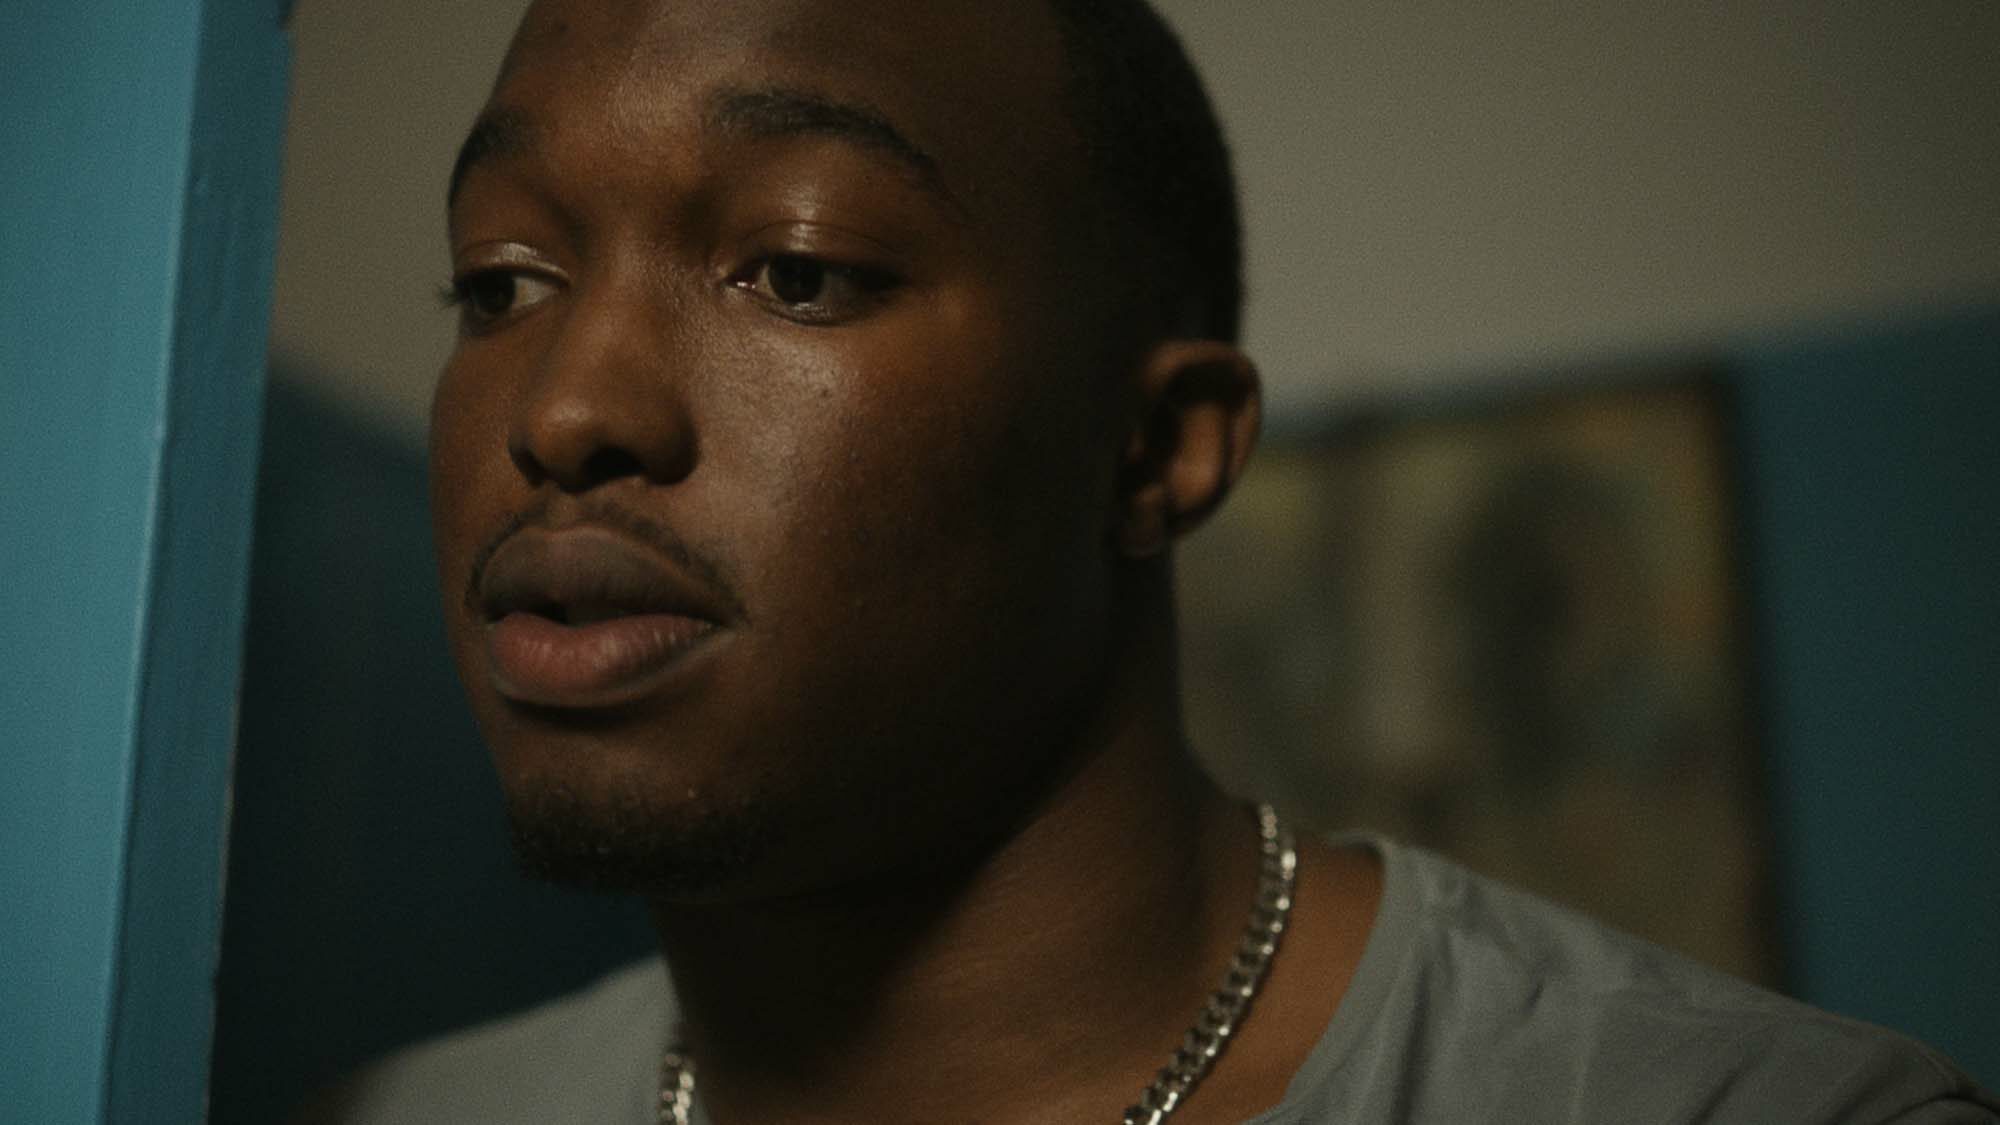 Hero film tackles mental health among young Black men - Raw London.